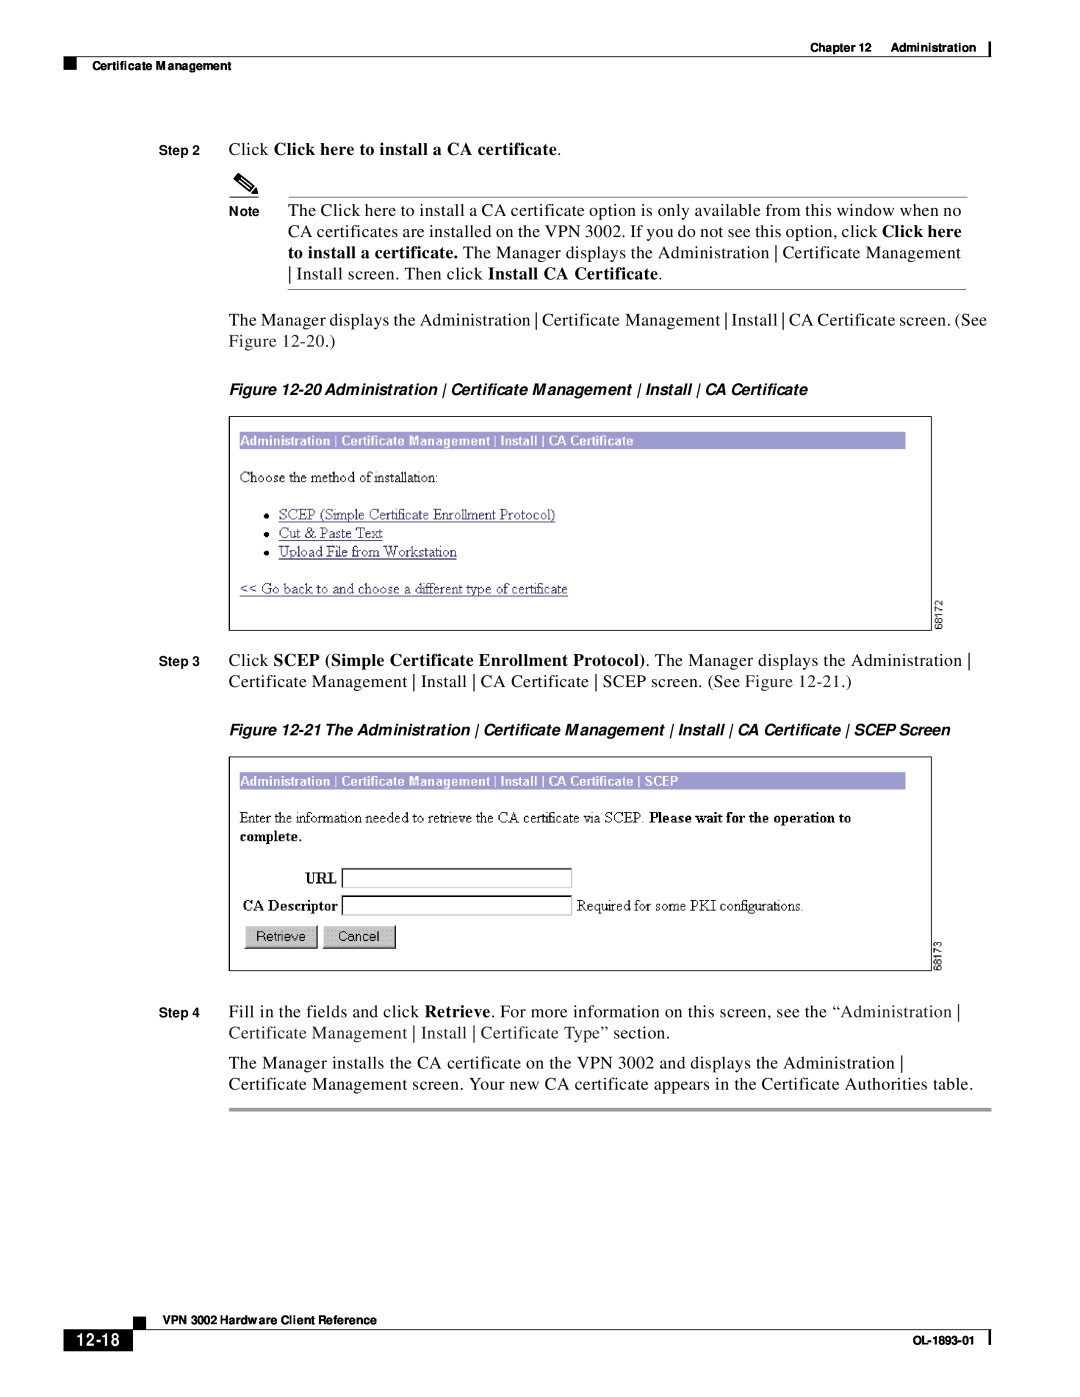 Cisco Systems VPN 3002 manual 12-18 